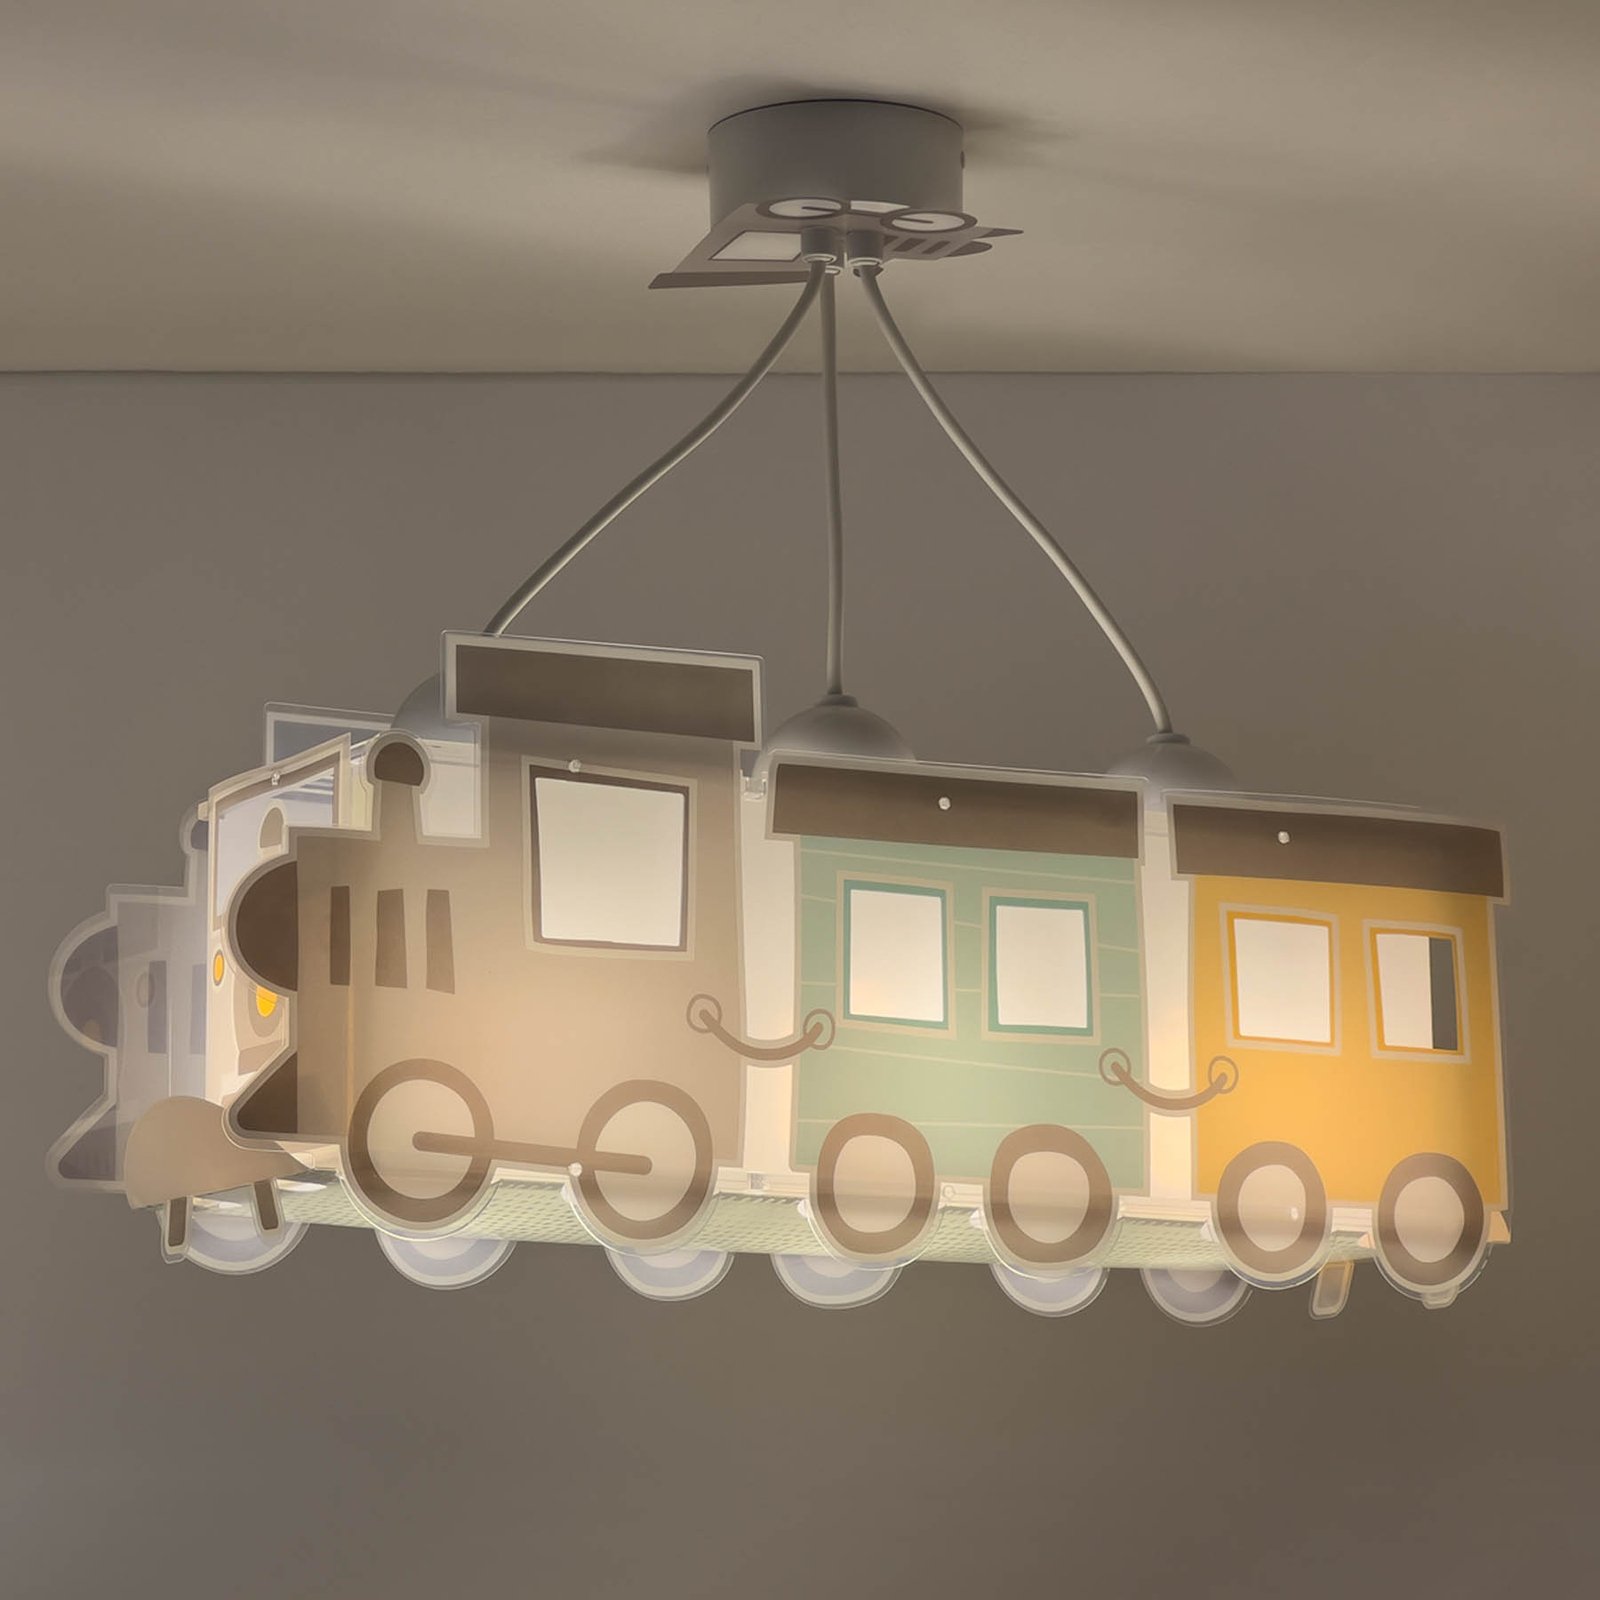 Dalber Night Train hanglamp als locomotief